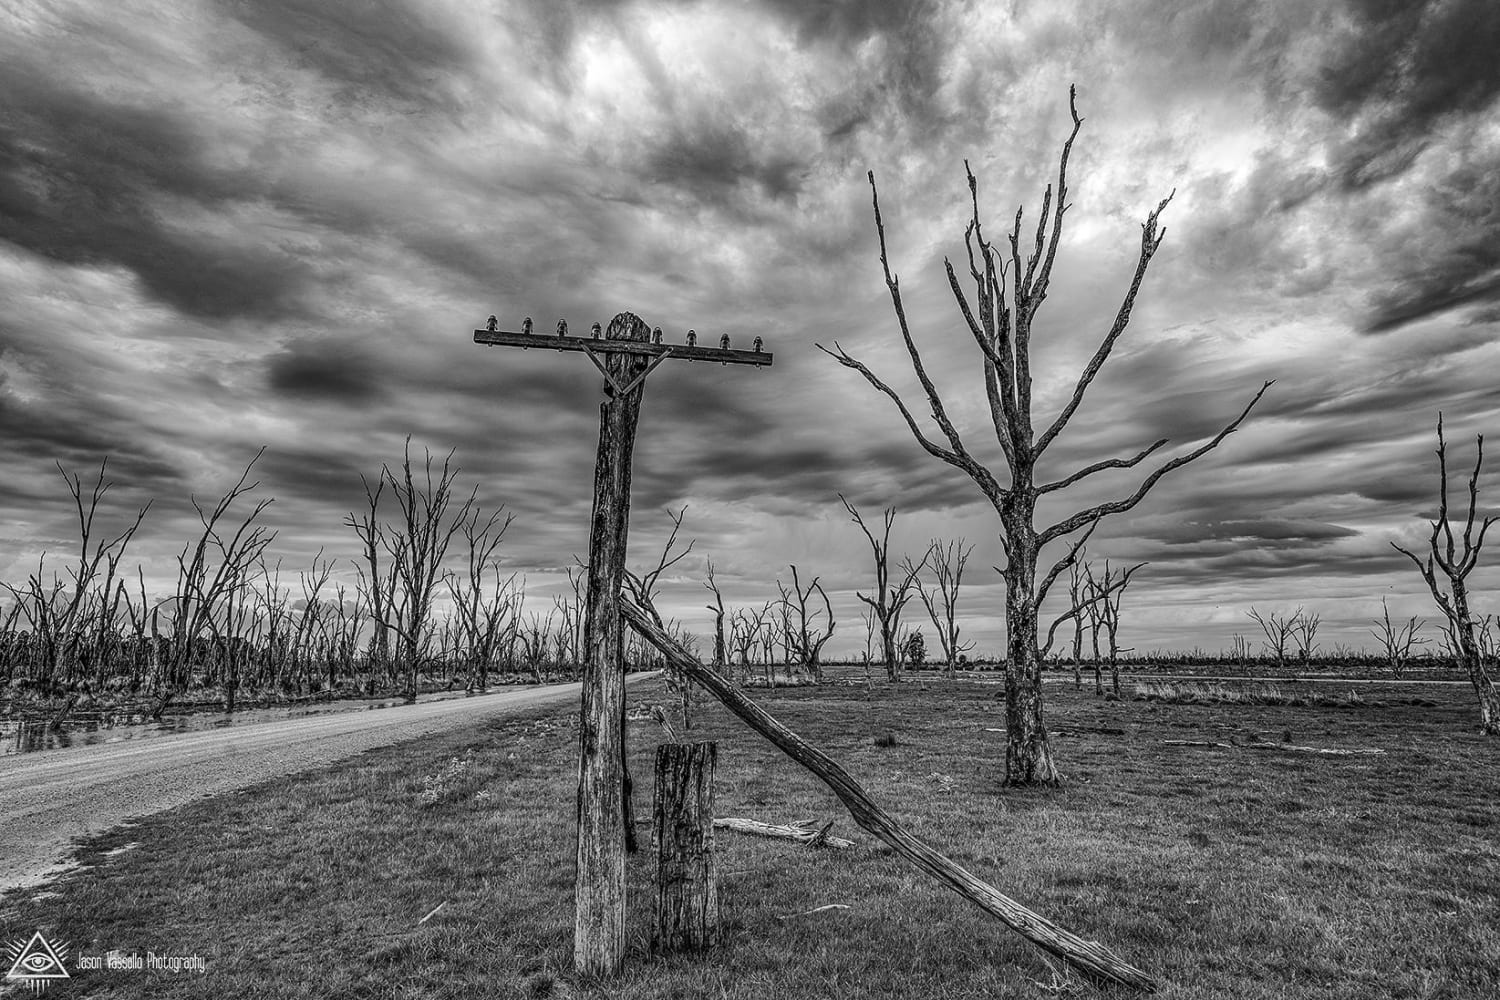 Abandoned wasteland in rural Australia